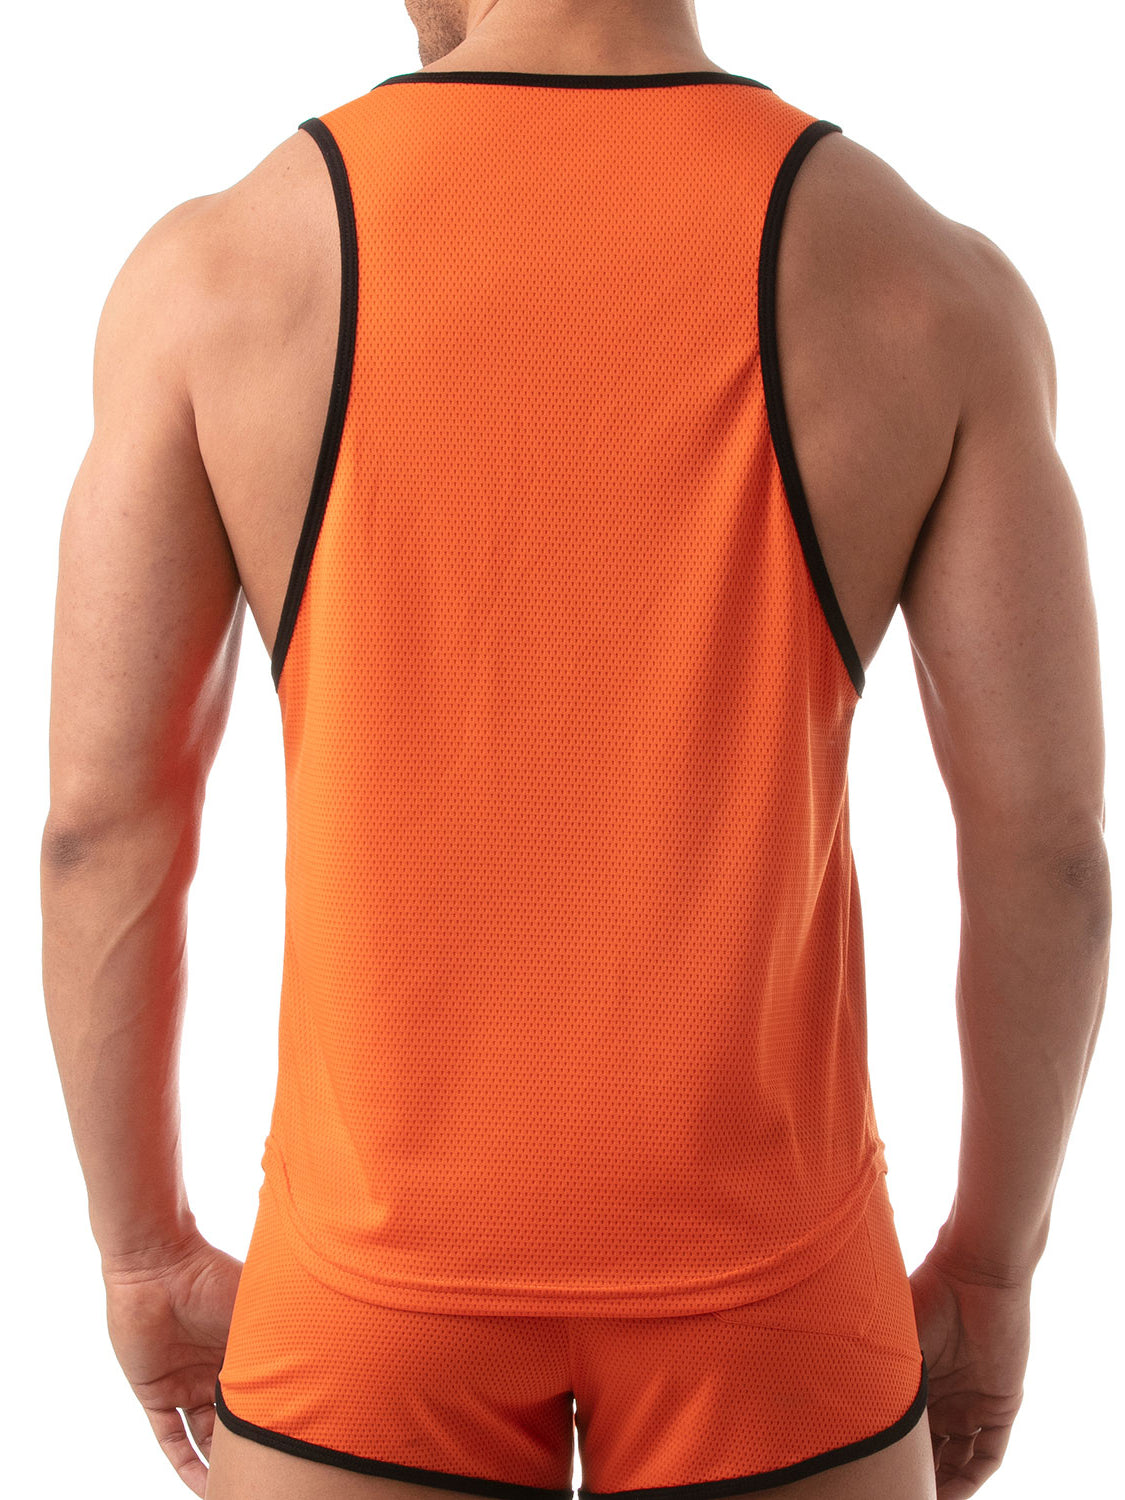 Tof Paris - Camiseta de Tirantes Malla Naranja